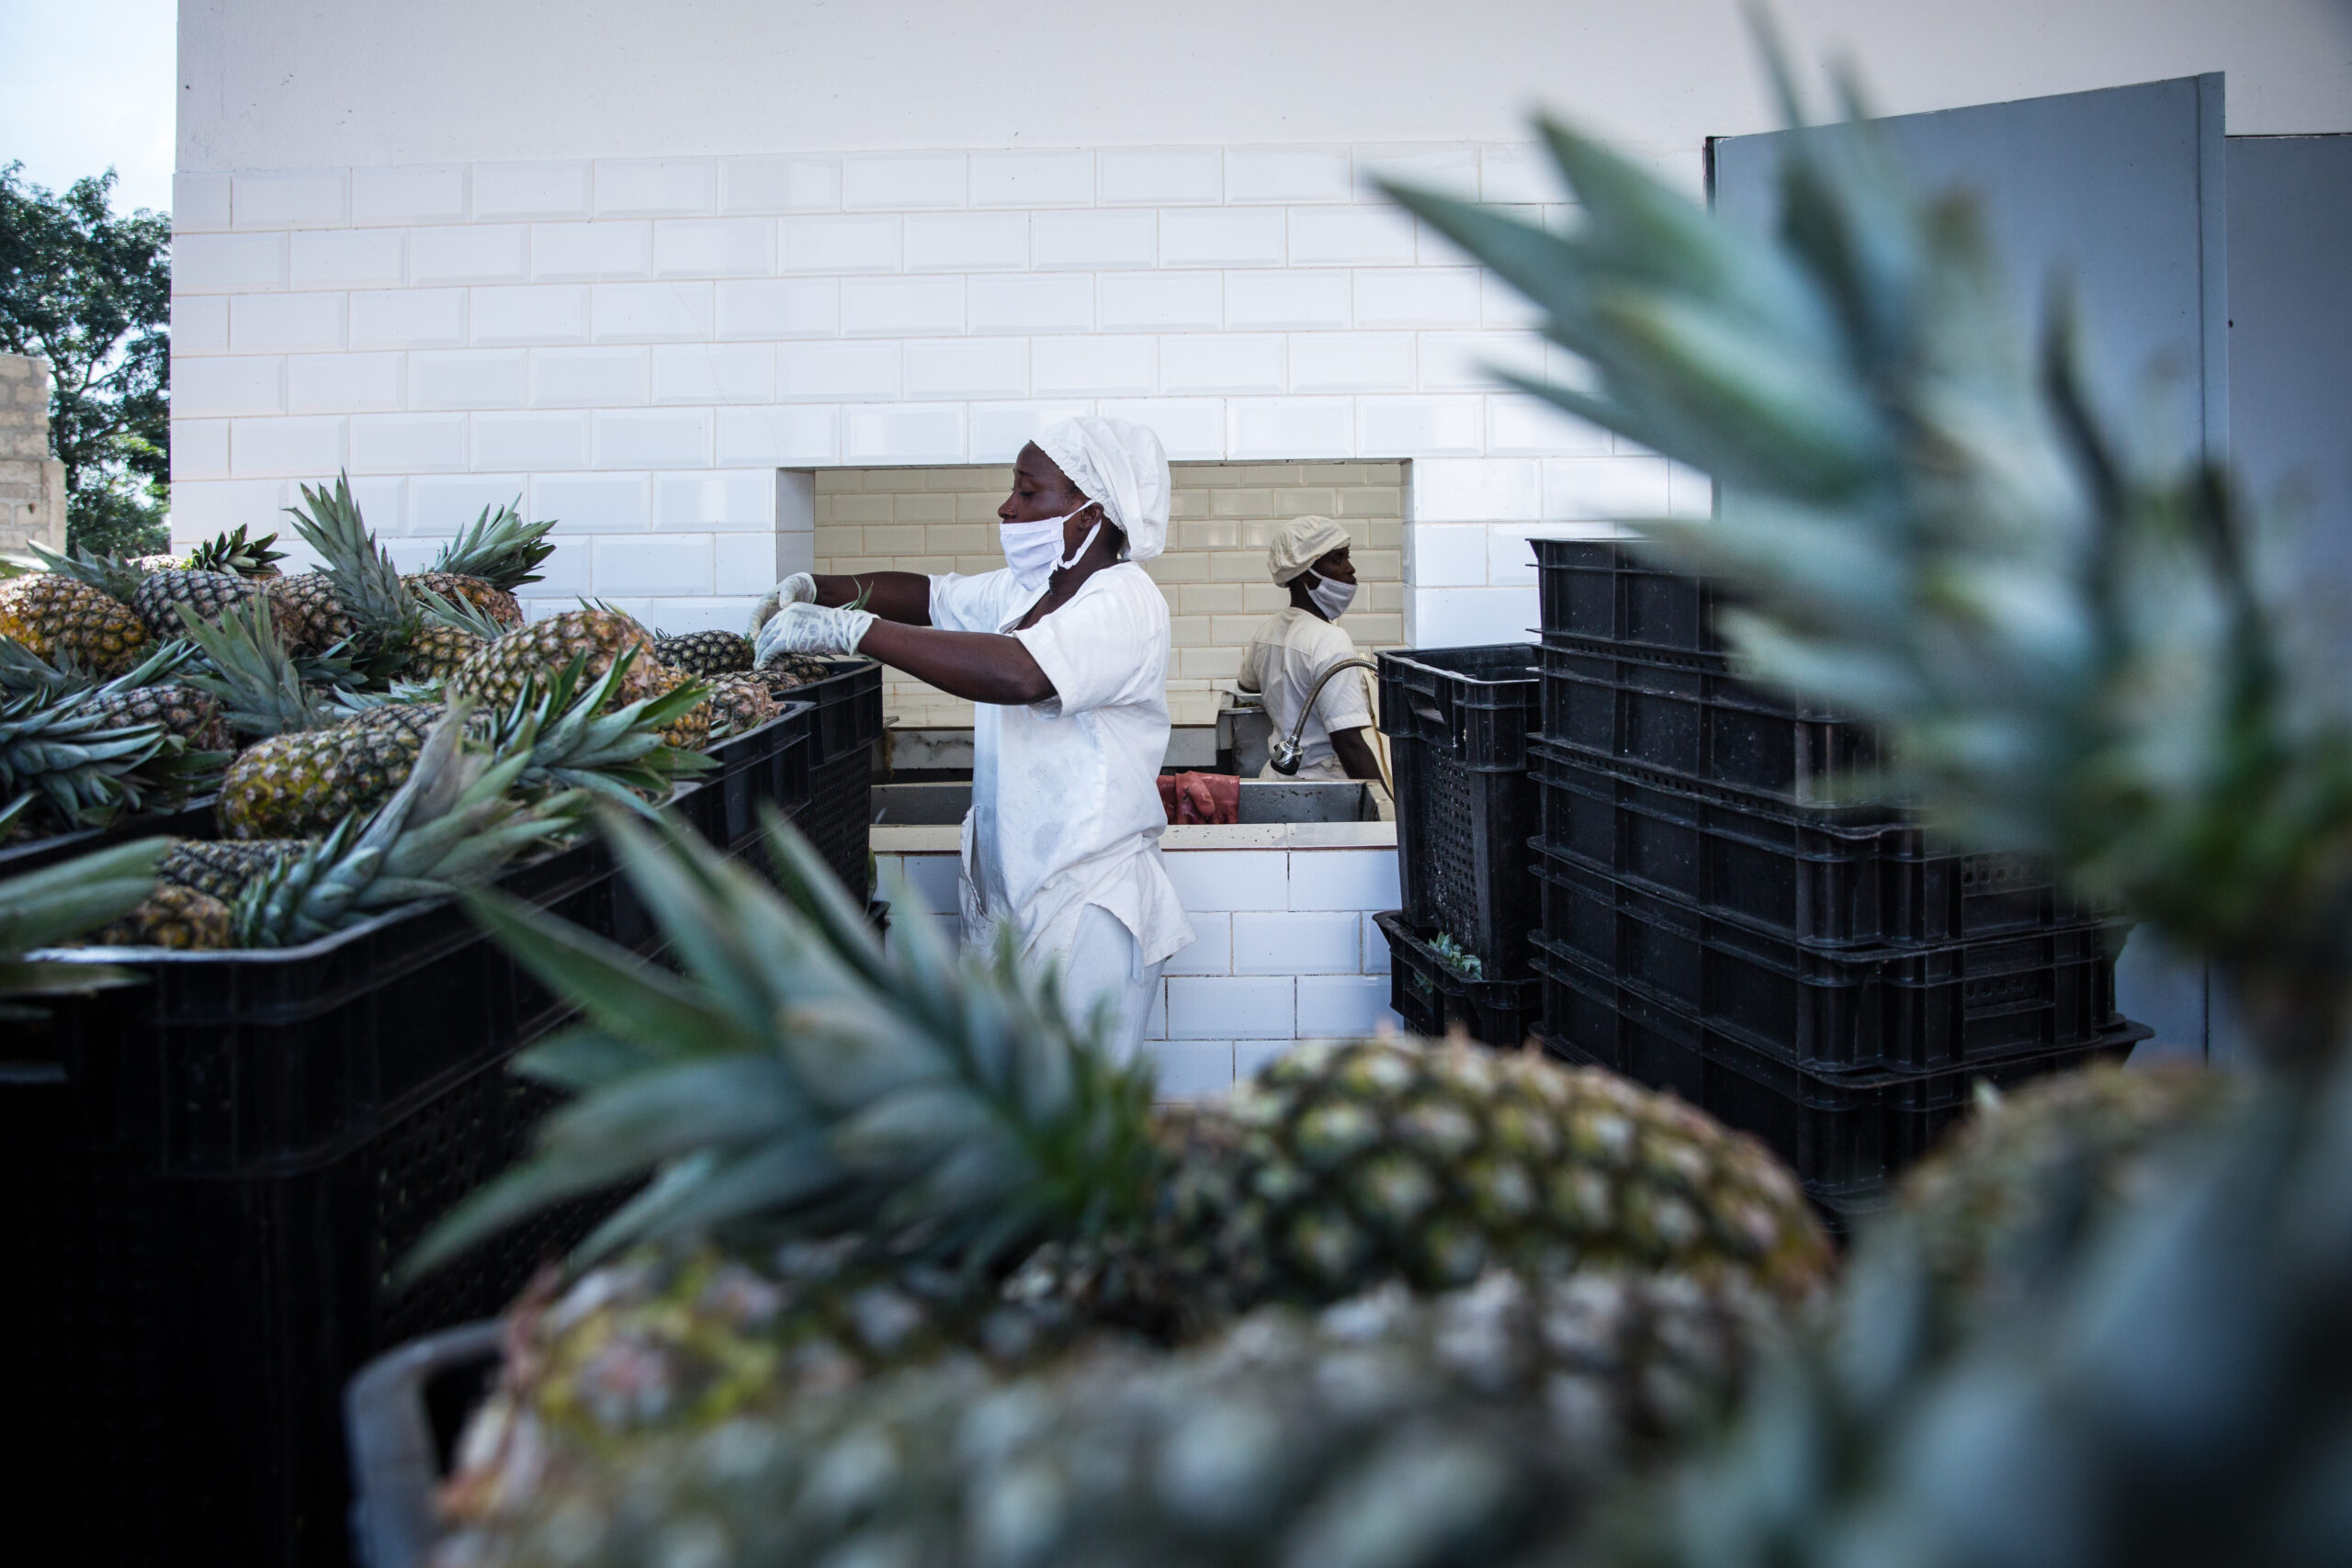 Women working in a pineapple processing factory in Benin.